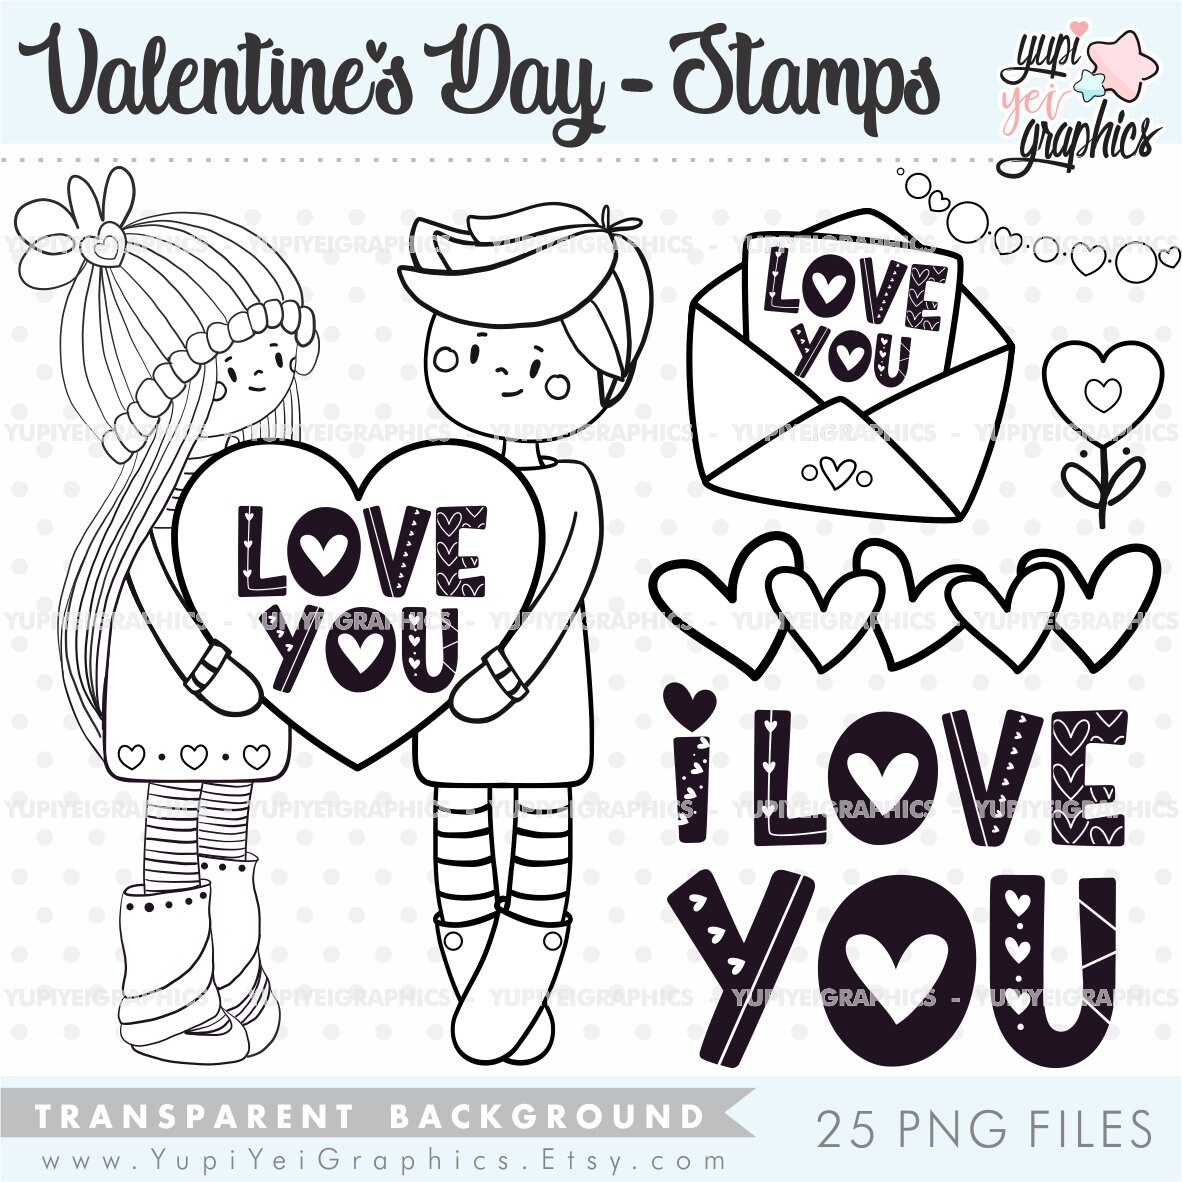 Love you digital paper pack, valentine scrapbook pages